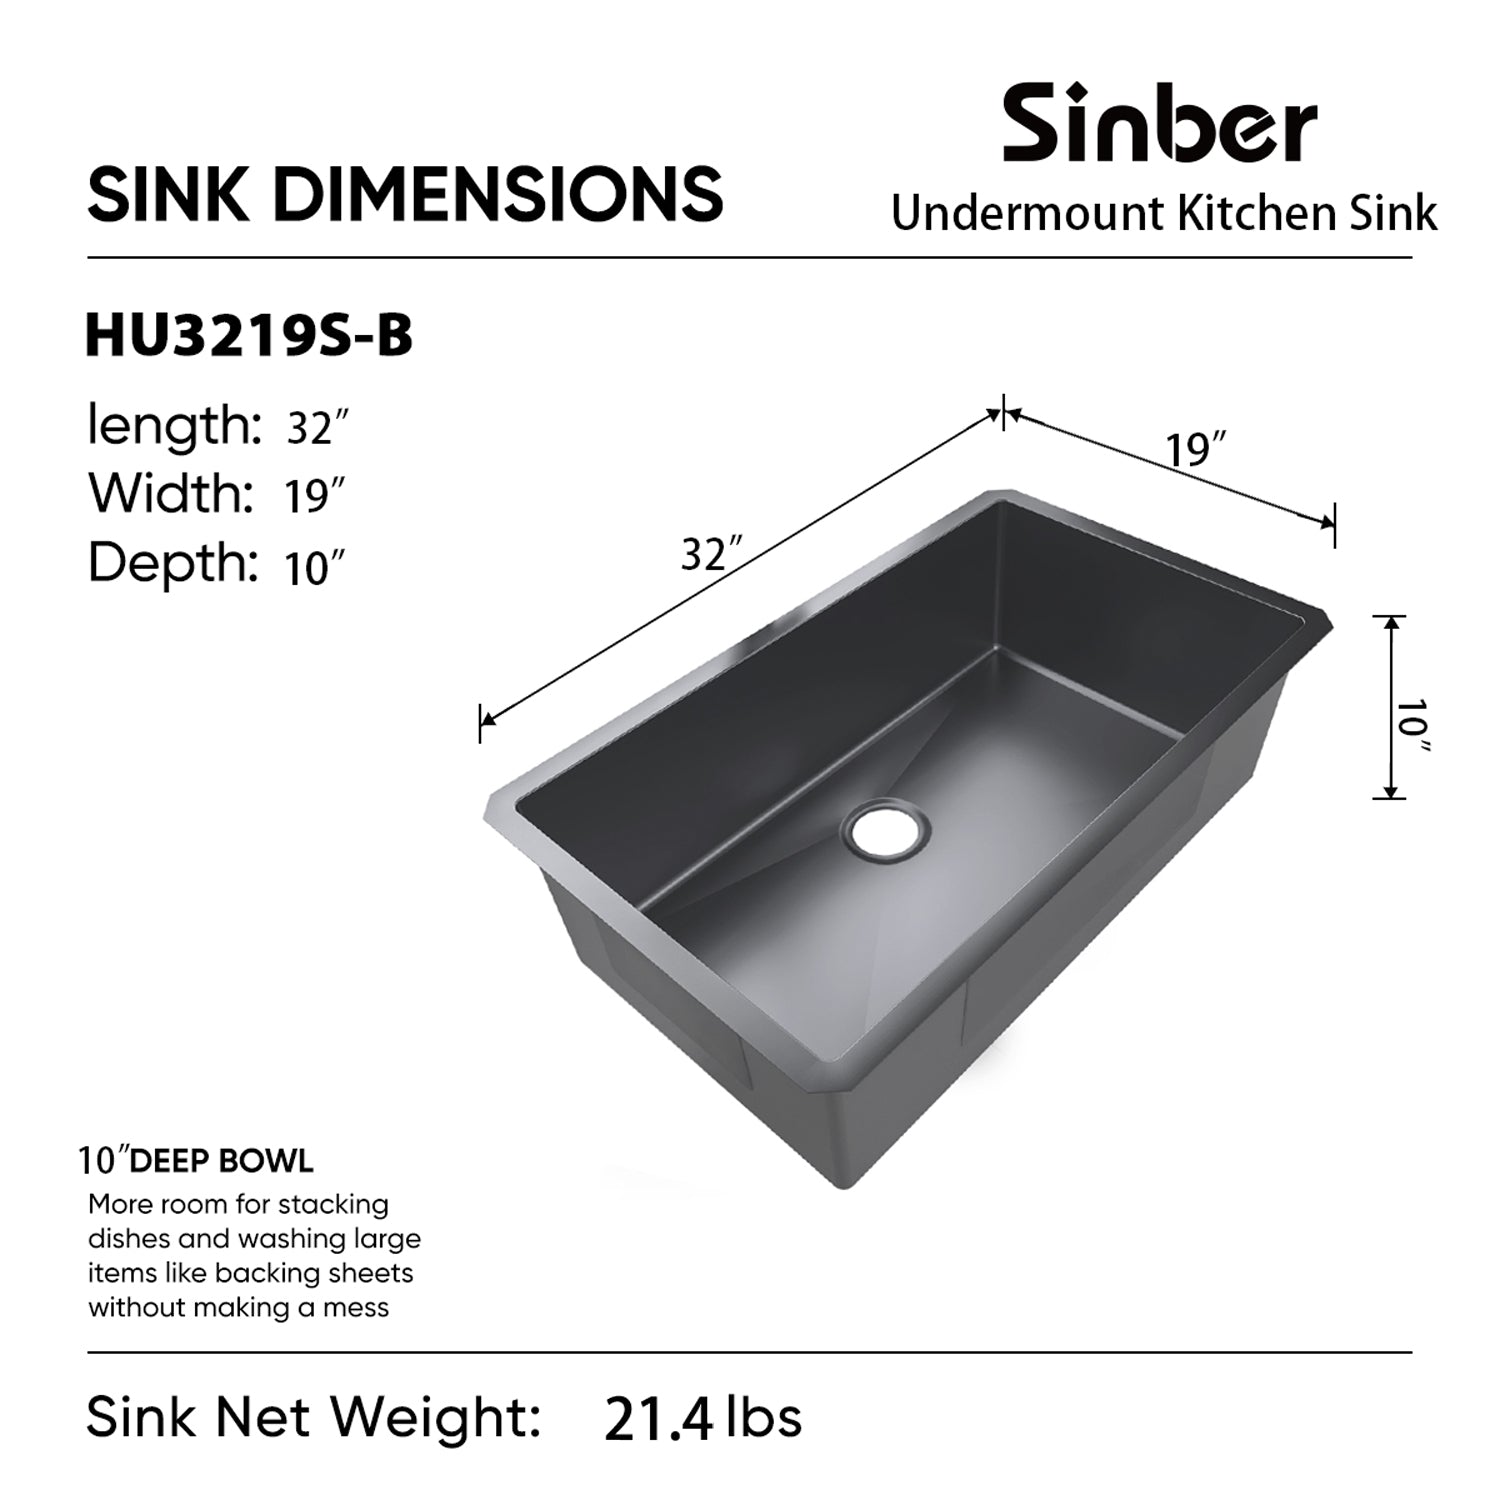 Sinber 32" x 19" x 10" Undermount Single Bowl Kitchen Sink with 18 Gauge 304 Stainless Steel Black Finish HU3219S-B (Sink Only)